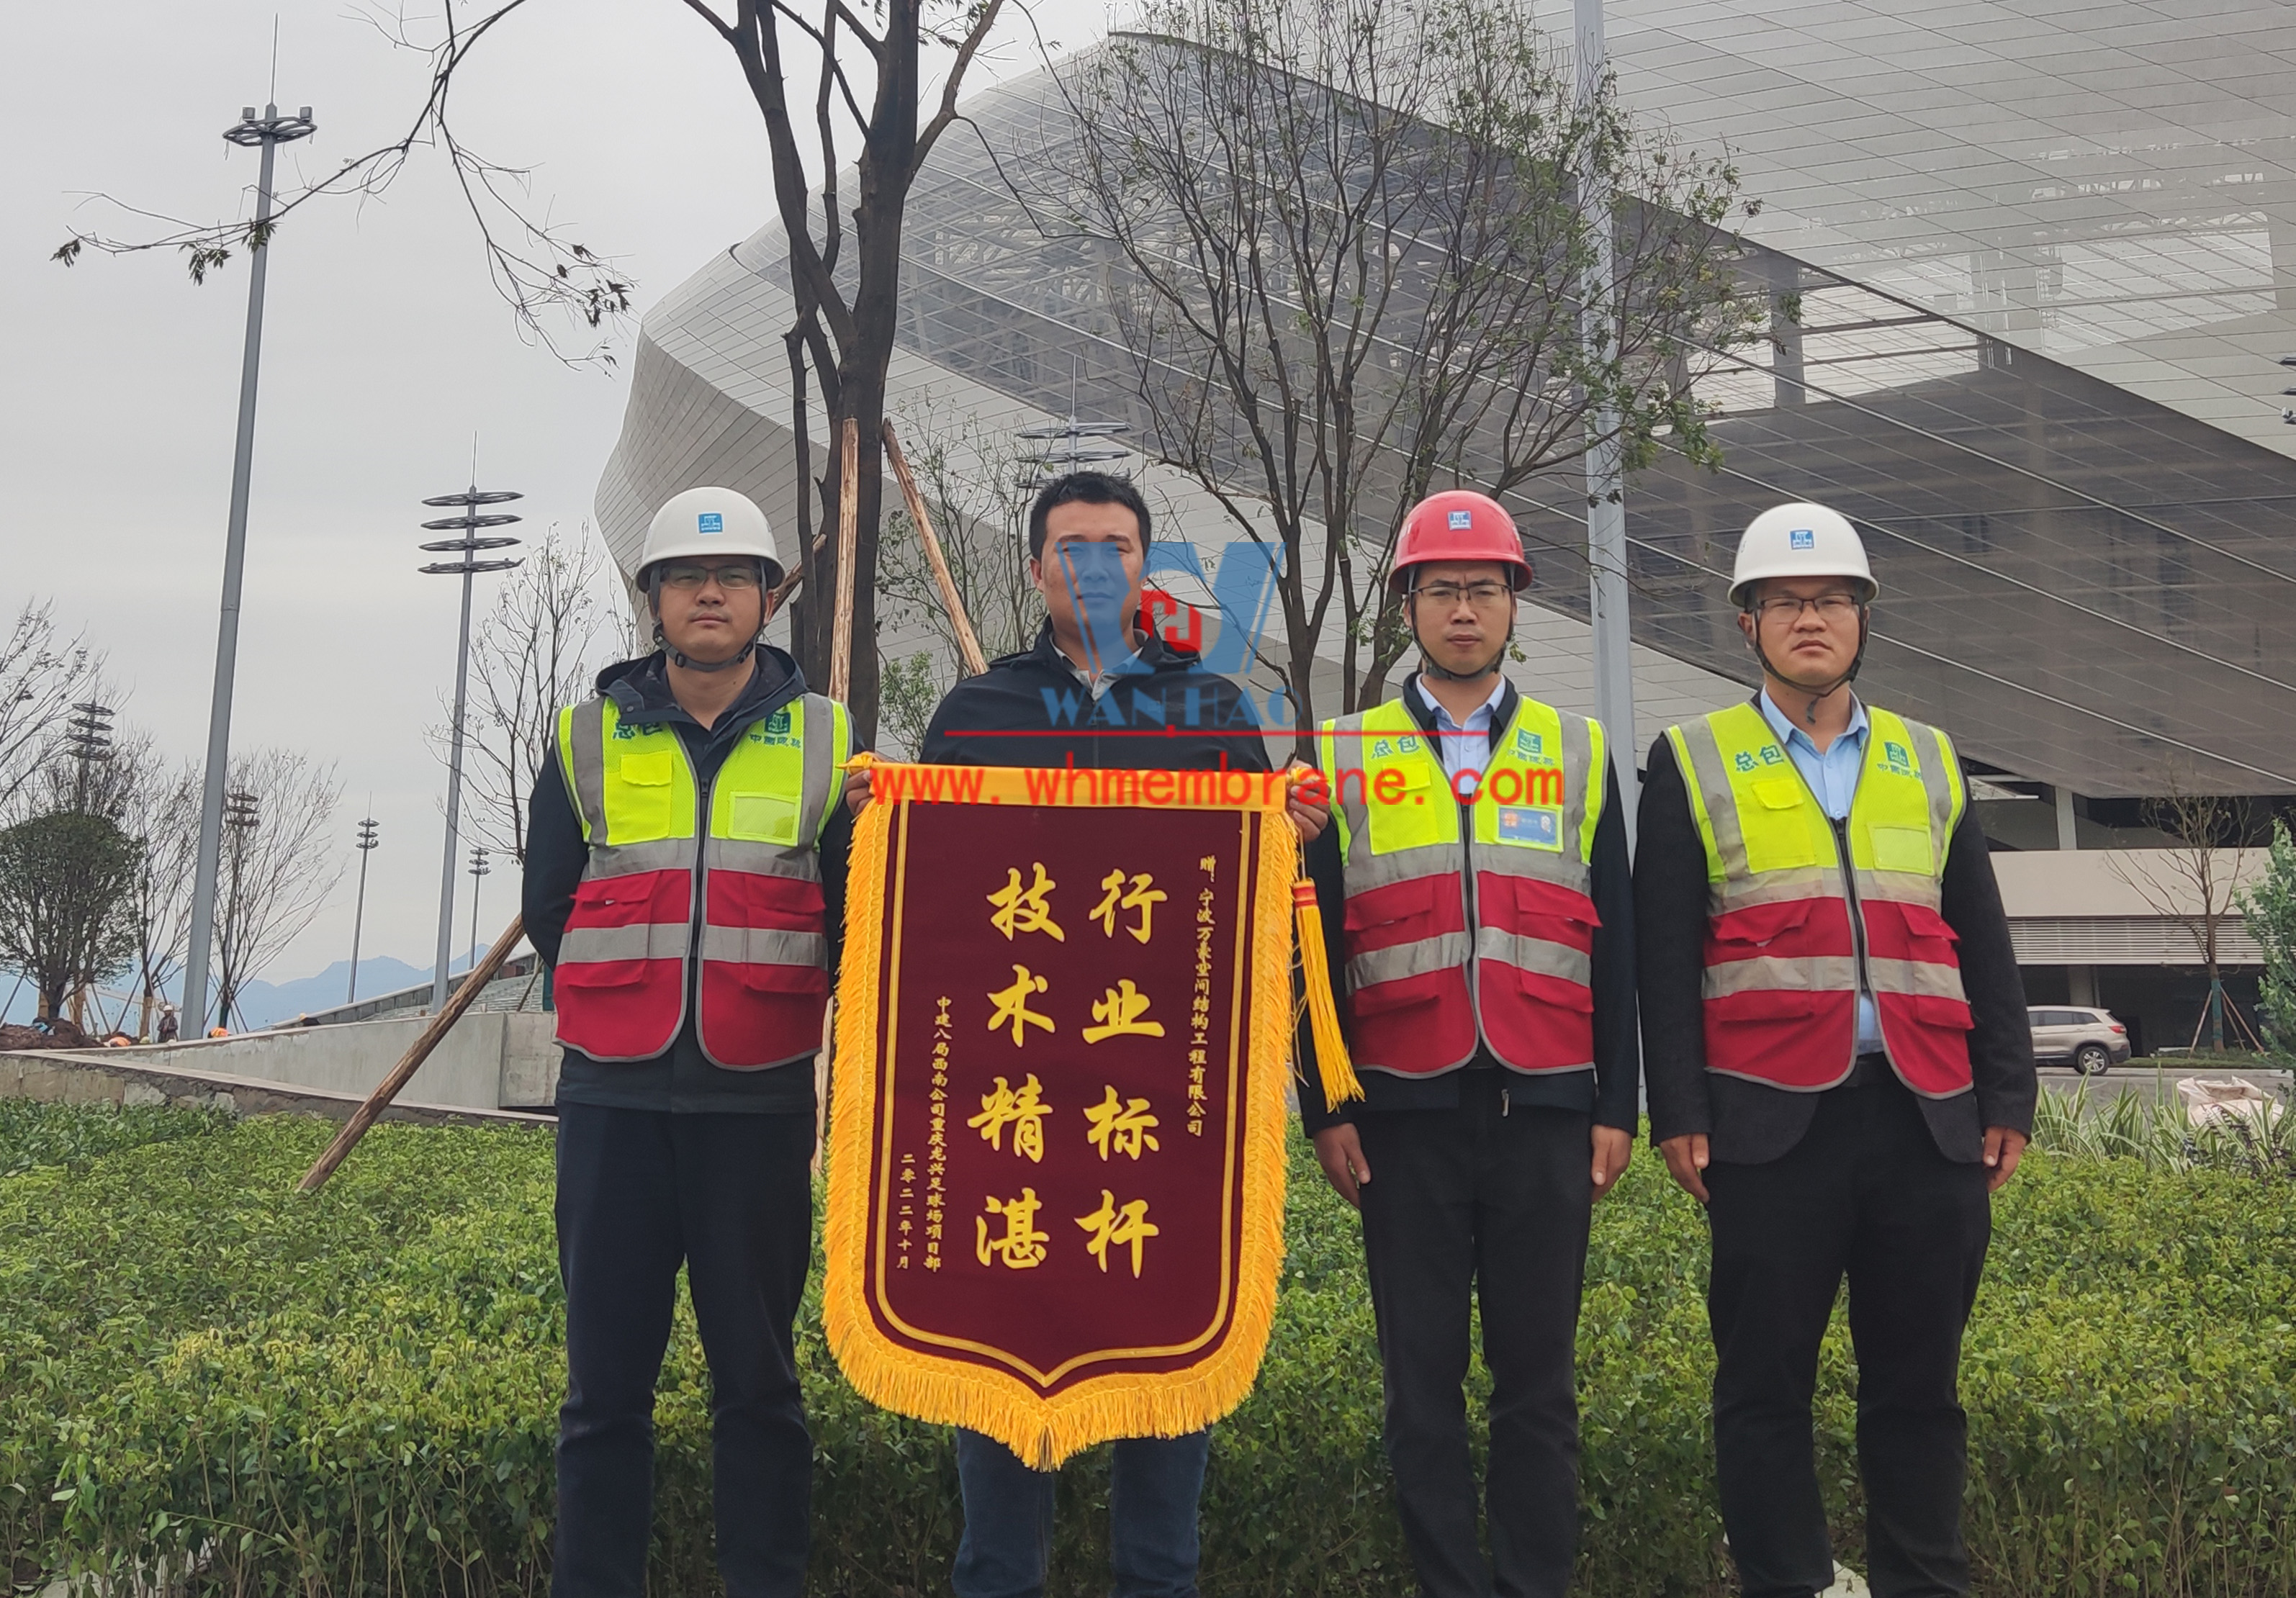 Zhong Qin Long Xing Football Stadium won the gold flag